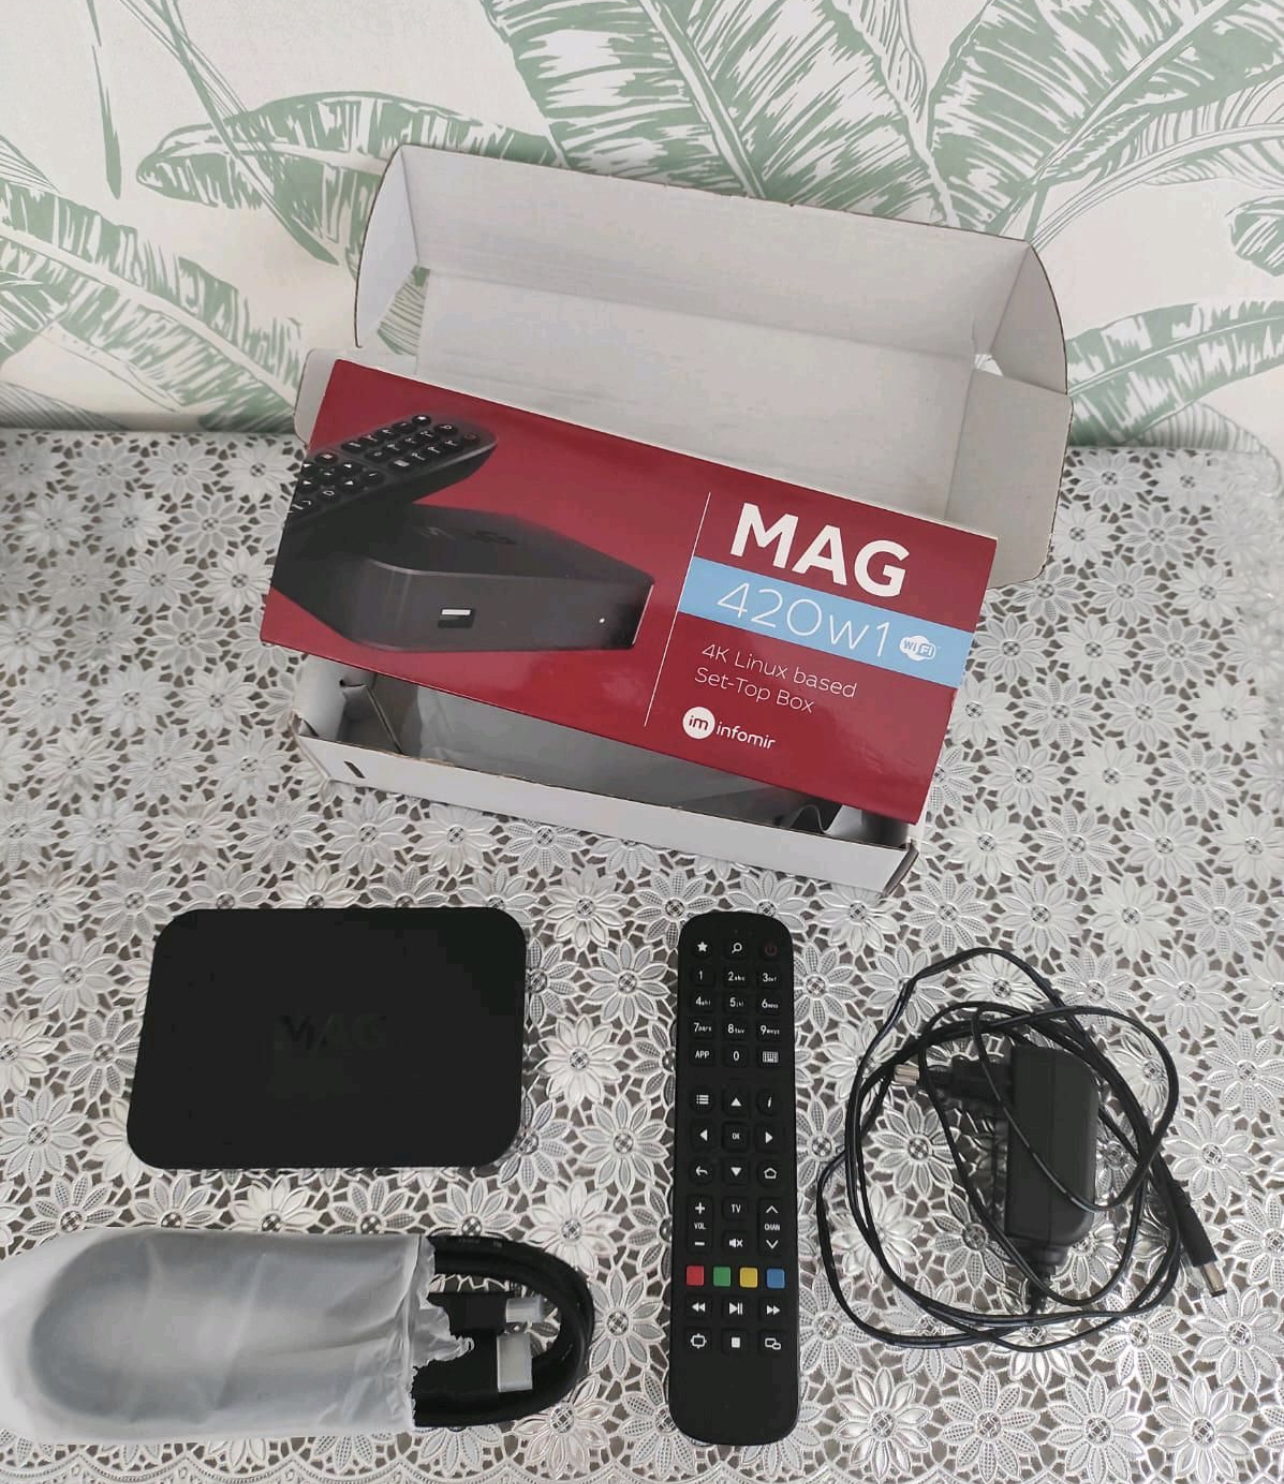 MAG 420w1 TV Box